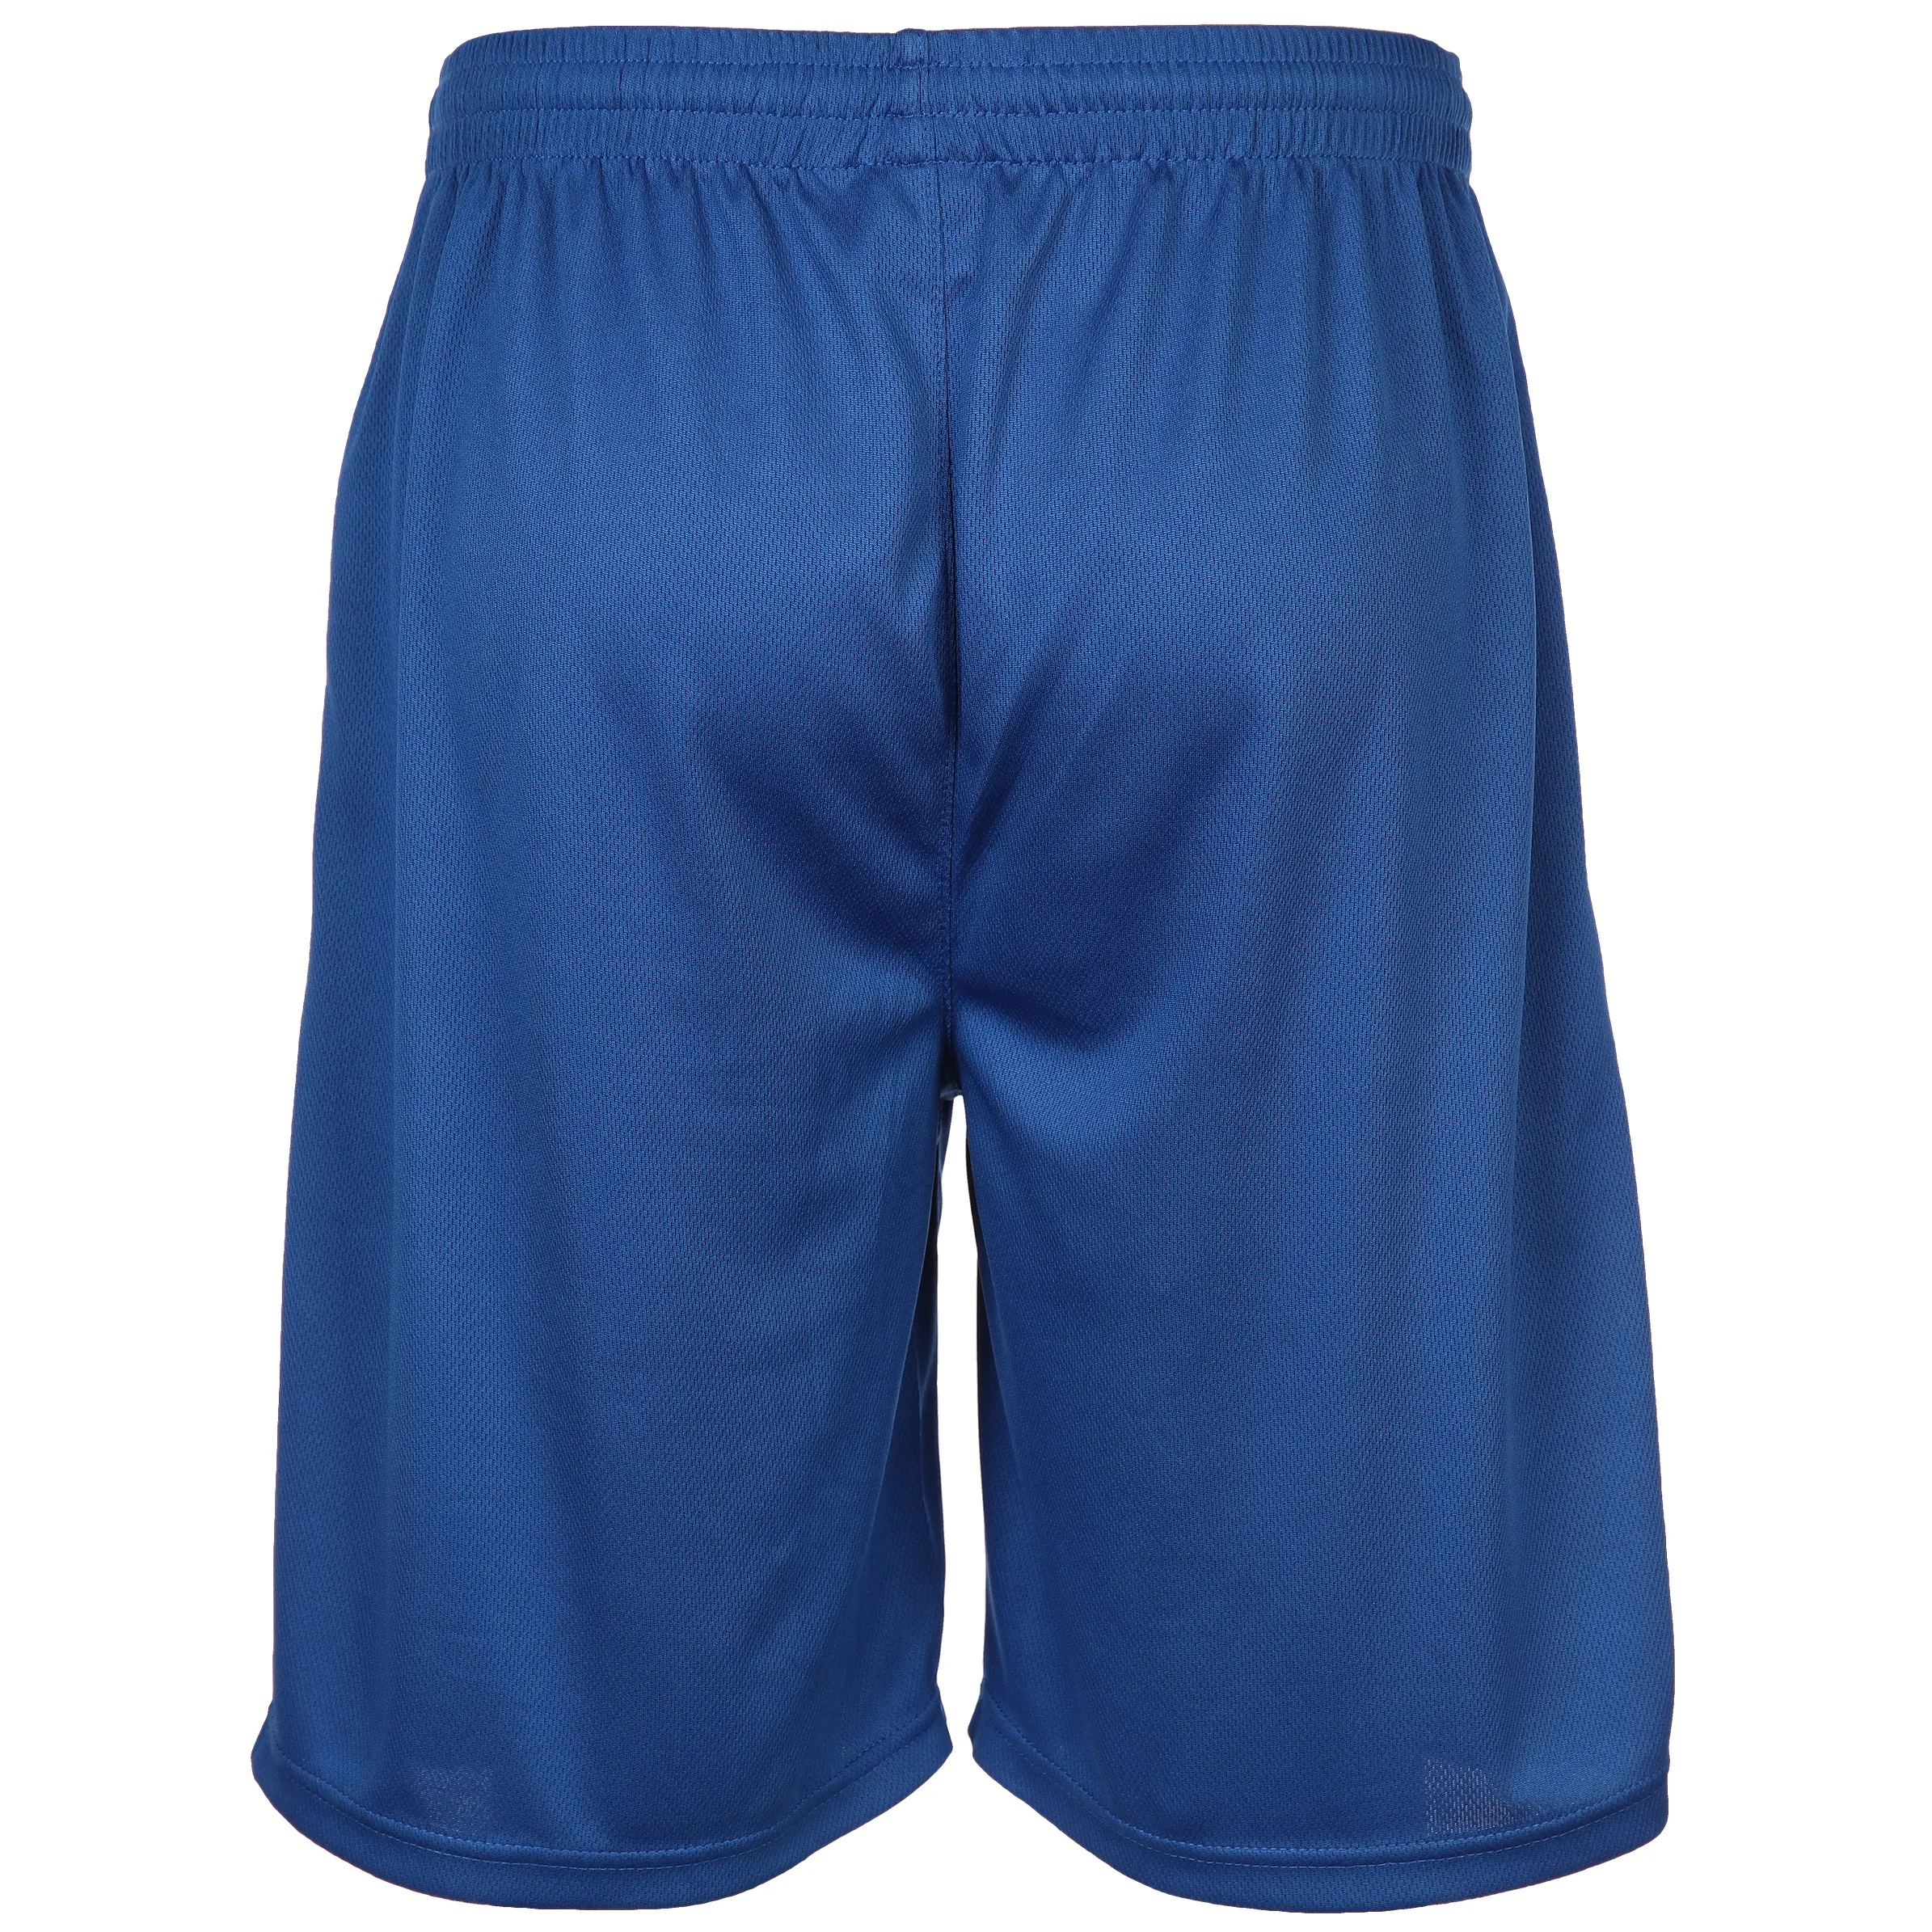 Athletic He-Sport Shorts Blau 882690 ROYAL BLUE 2